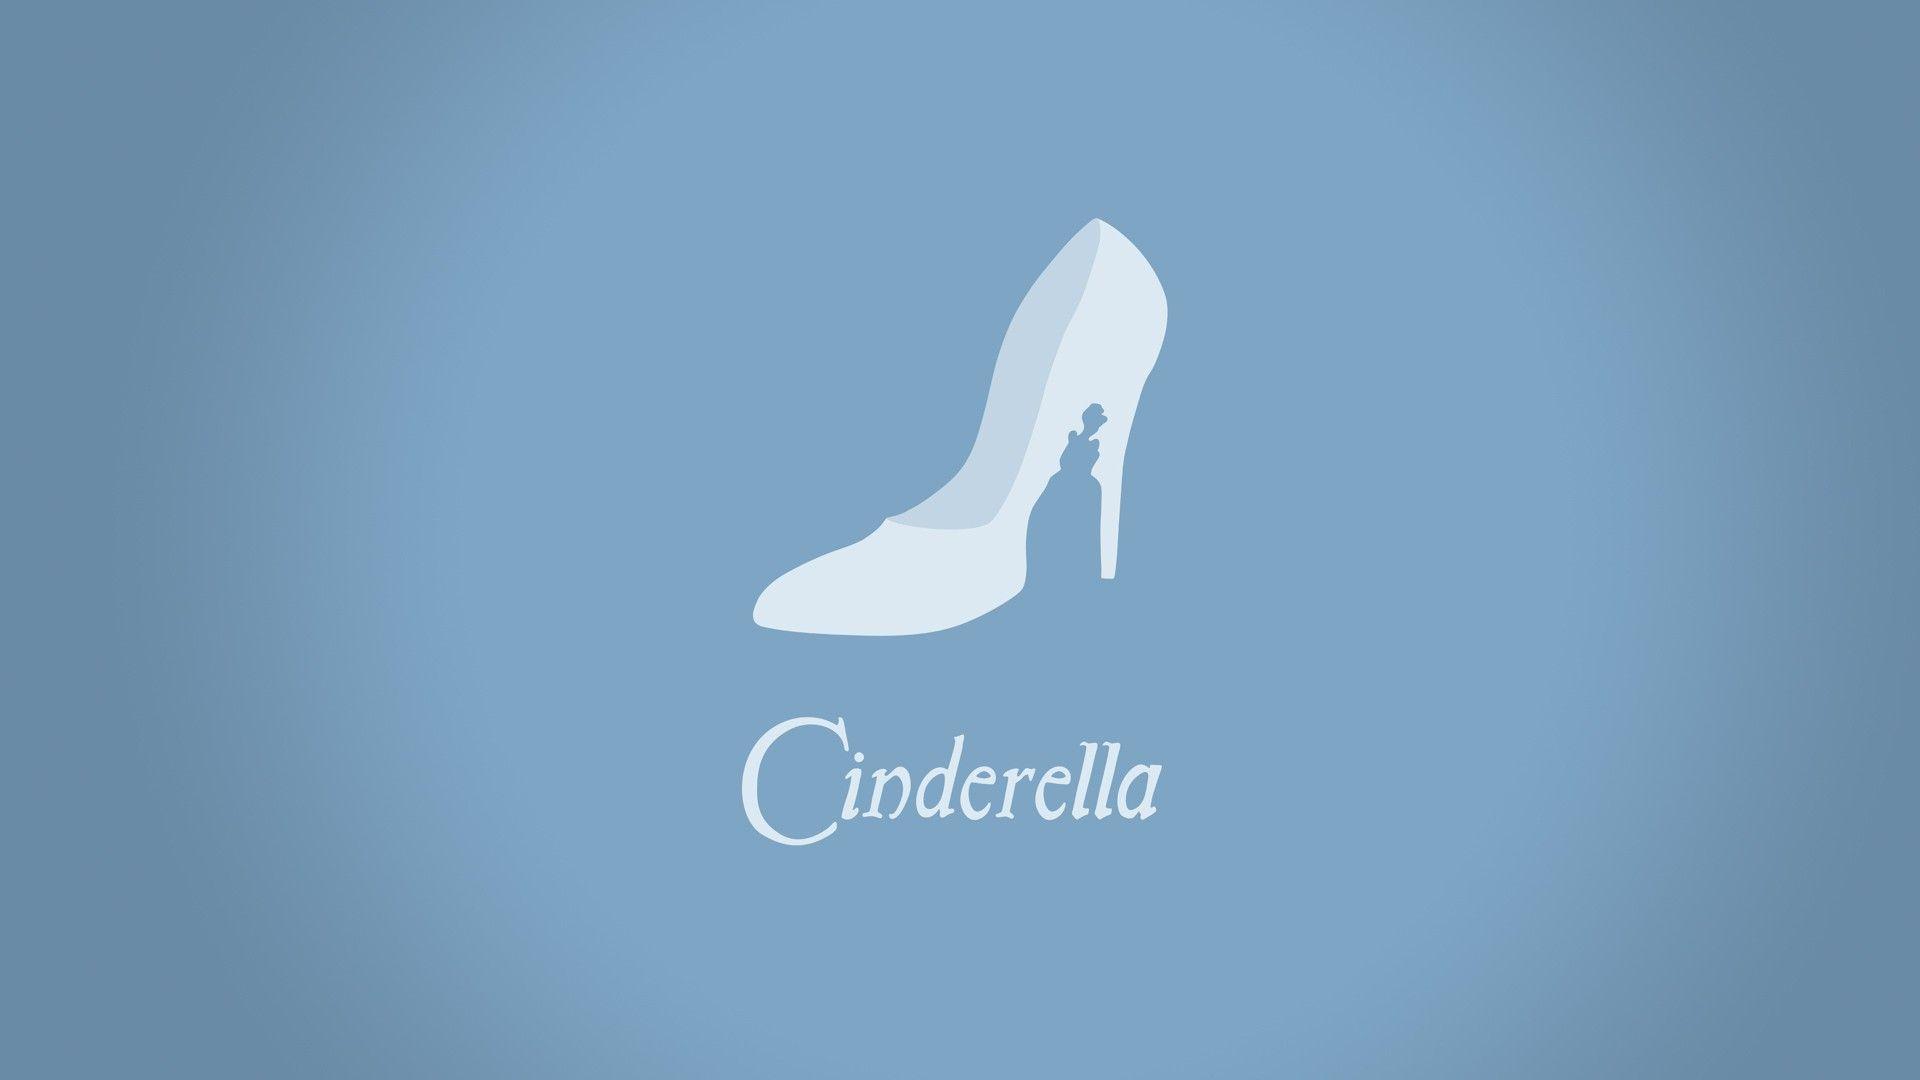 Cinderella Computer Wallpaper, Desktop Background 1920x1080 Id